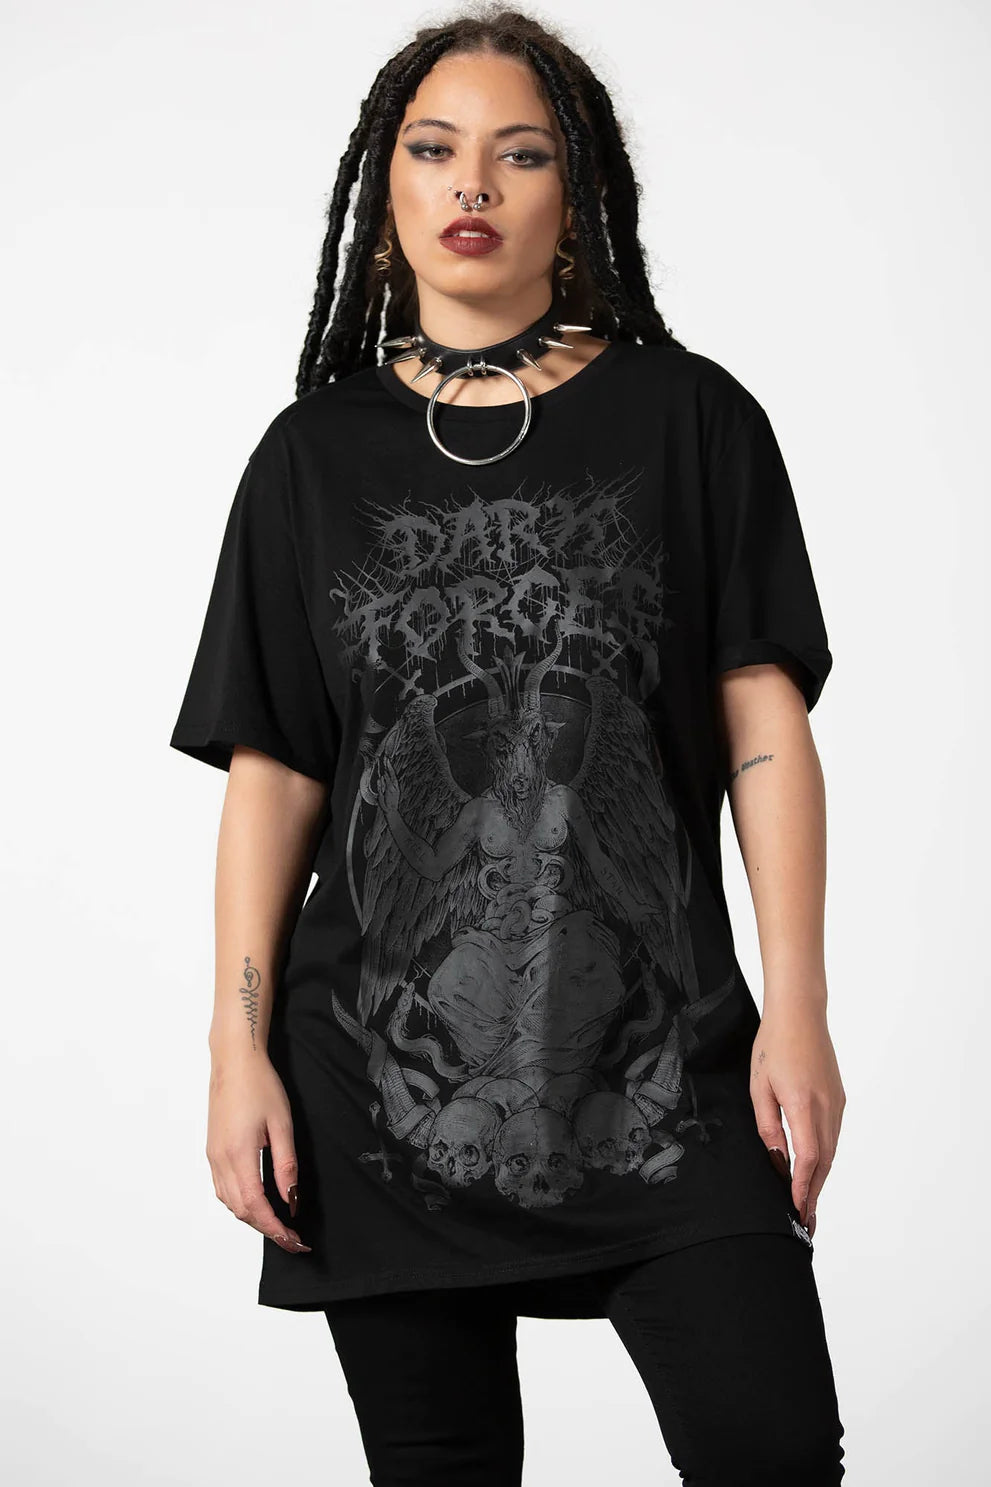 T-Shirt Dark Forces